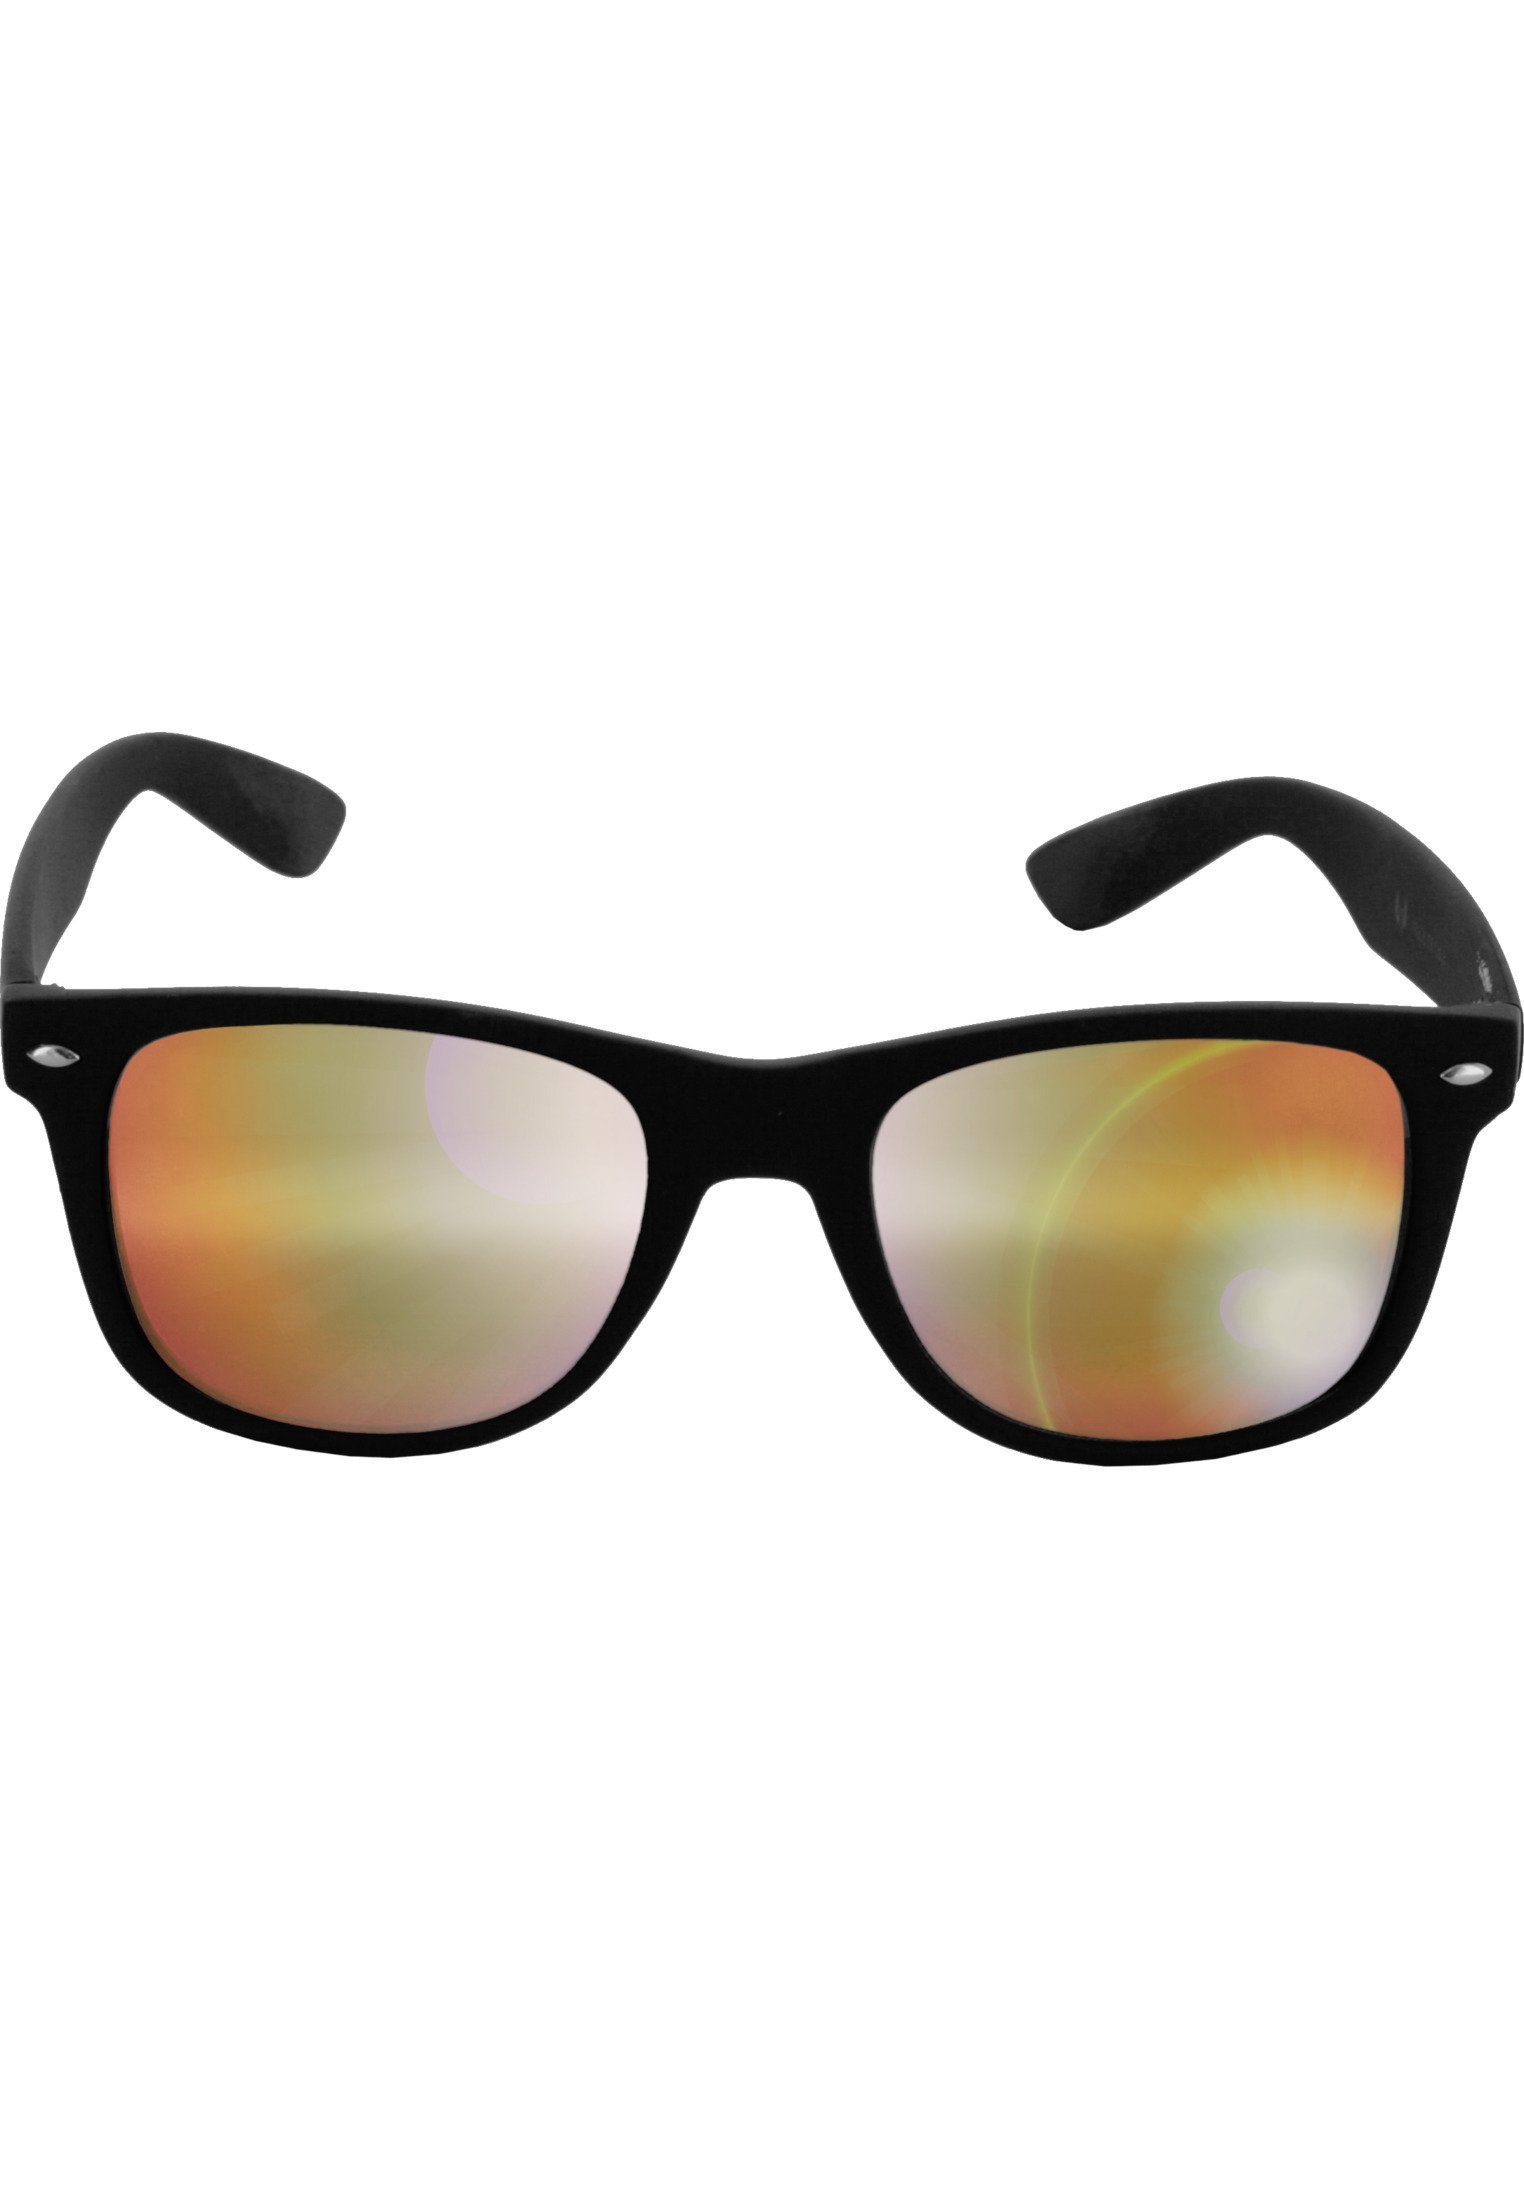 MSTRDS Sonnenbrille Accessoires Sunglasses Likoma blk/orange Mirror